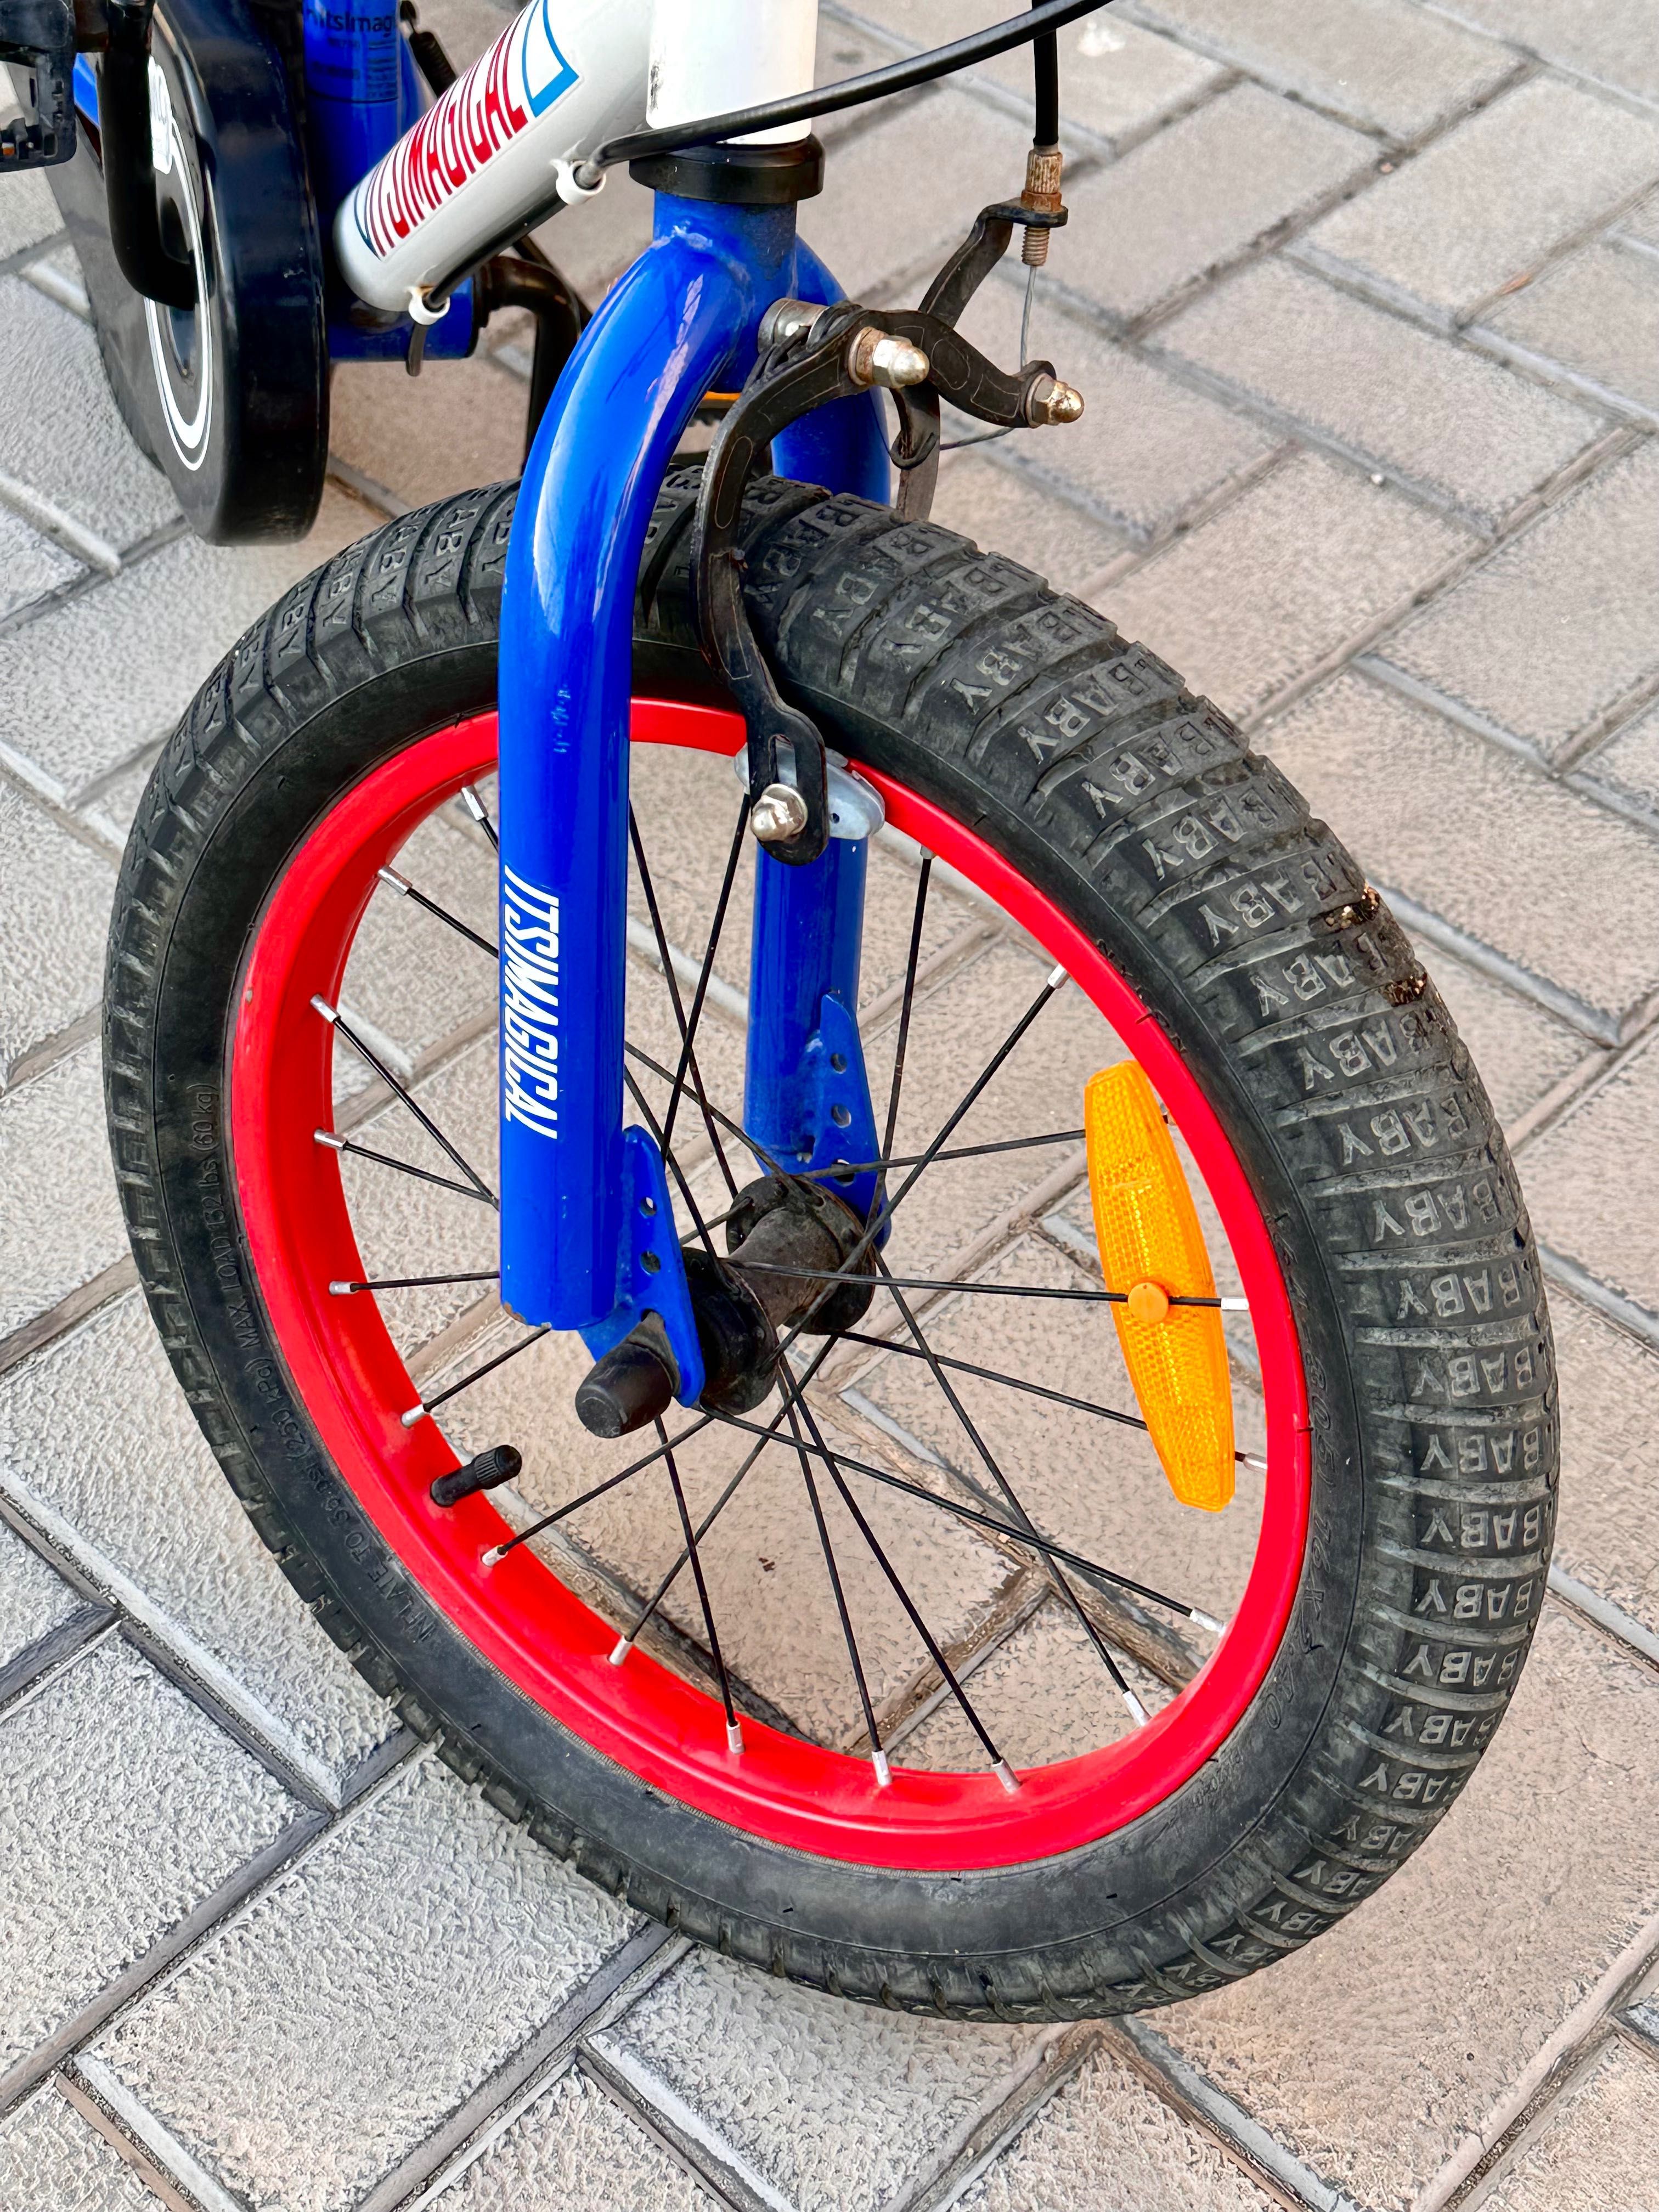 Bicicleta copii - Sport Bike 16 - IMAGINARIUM + casca cadou